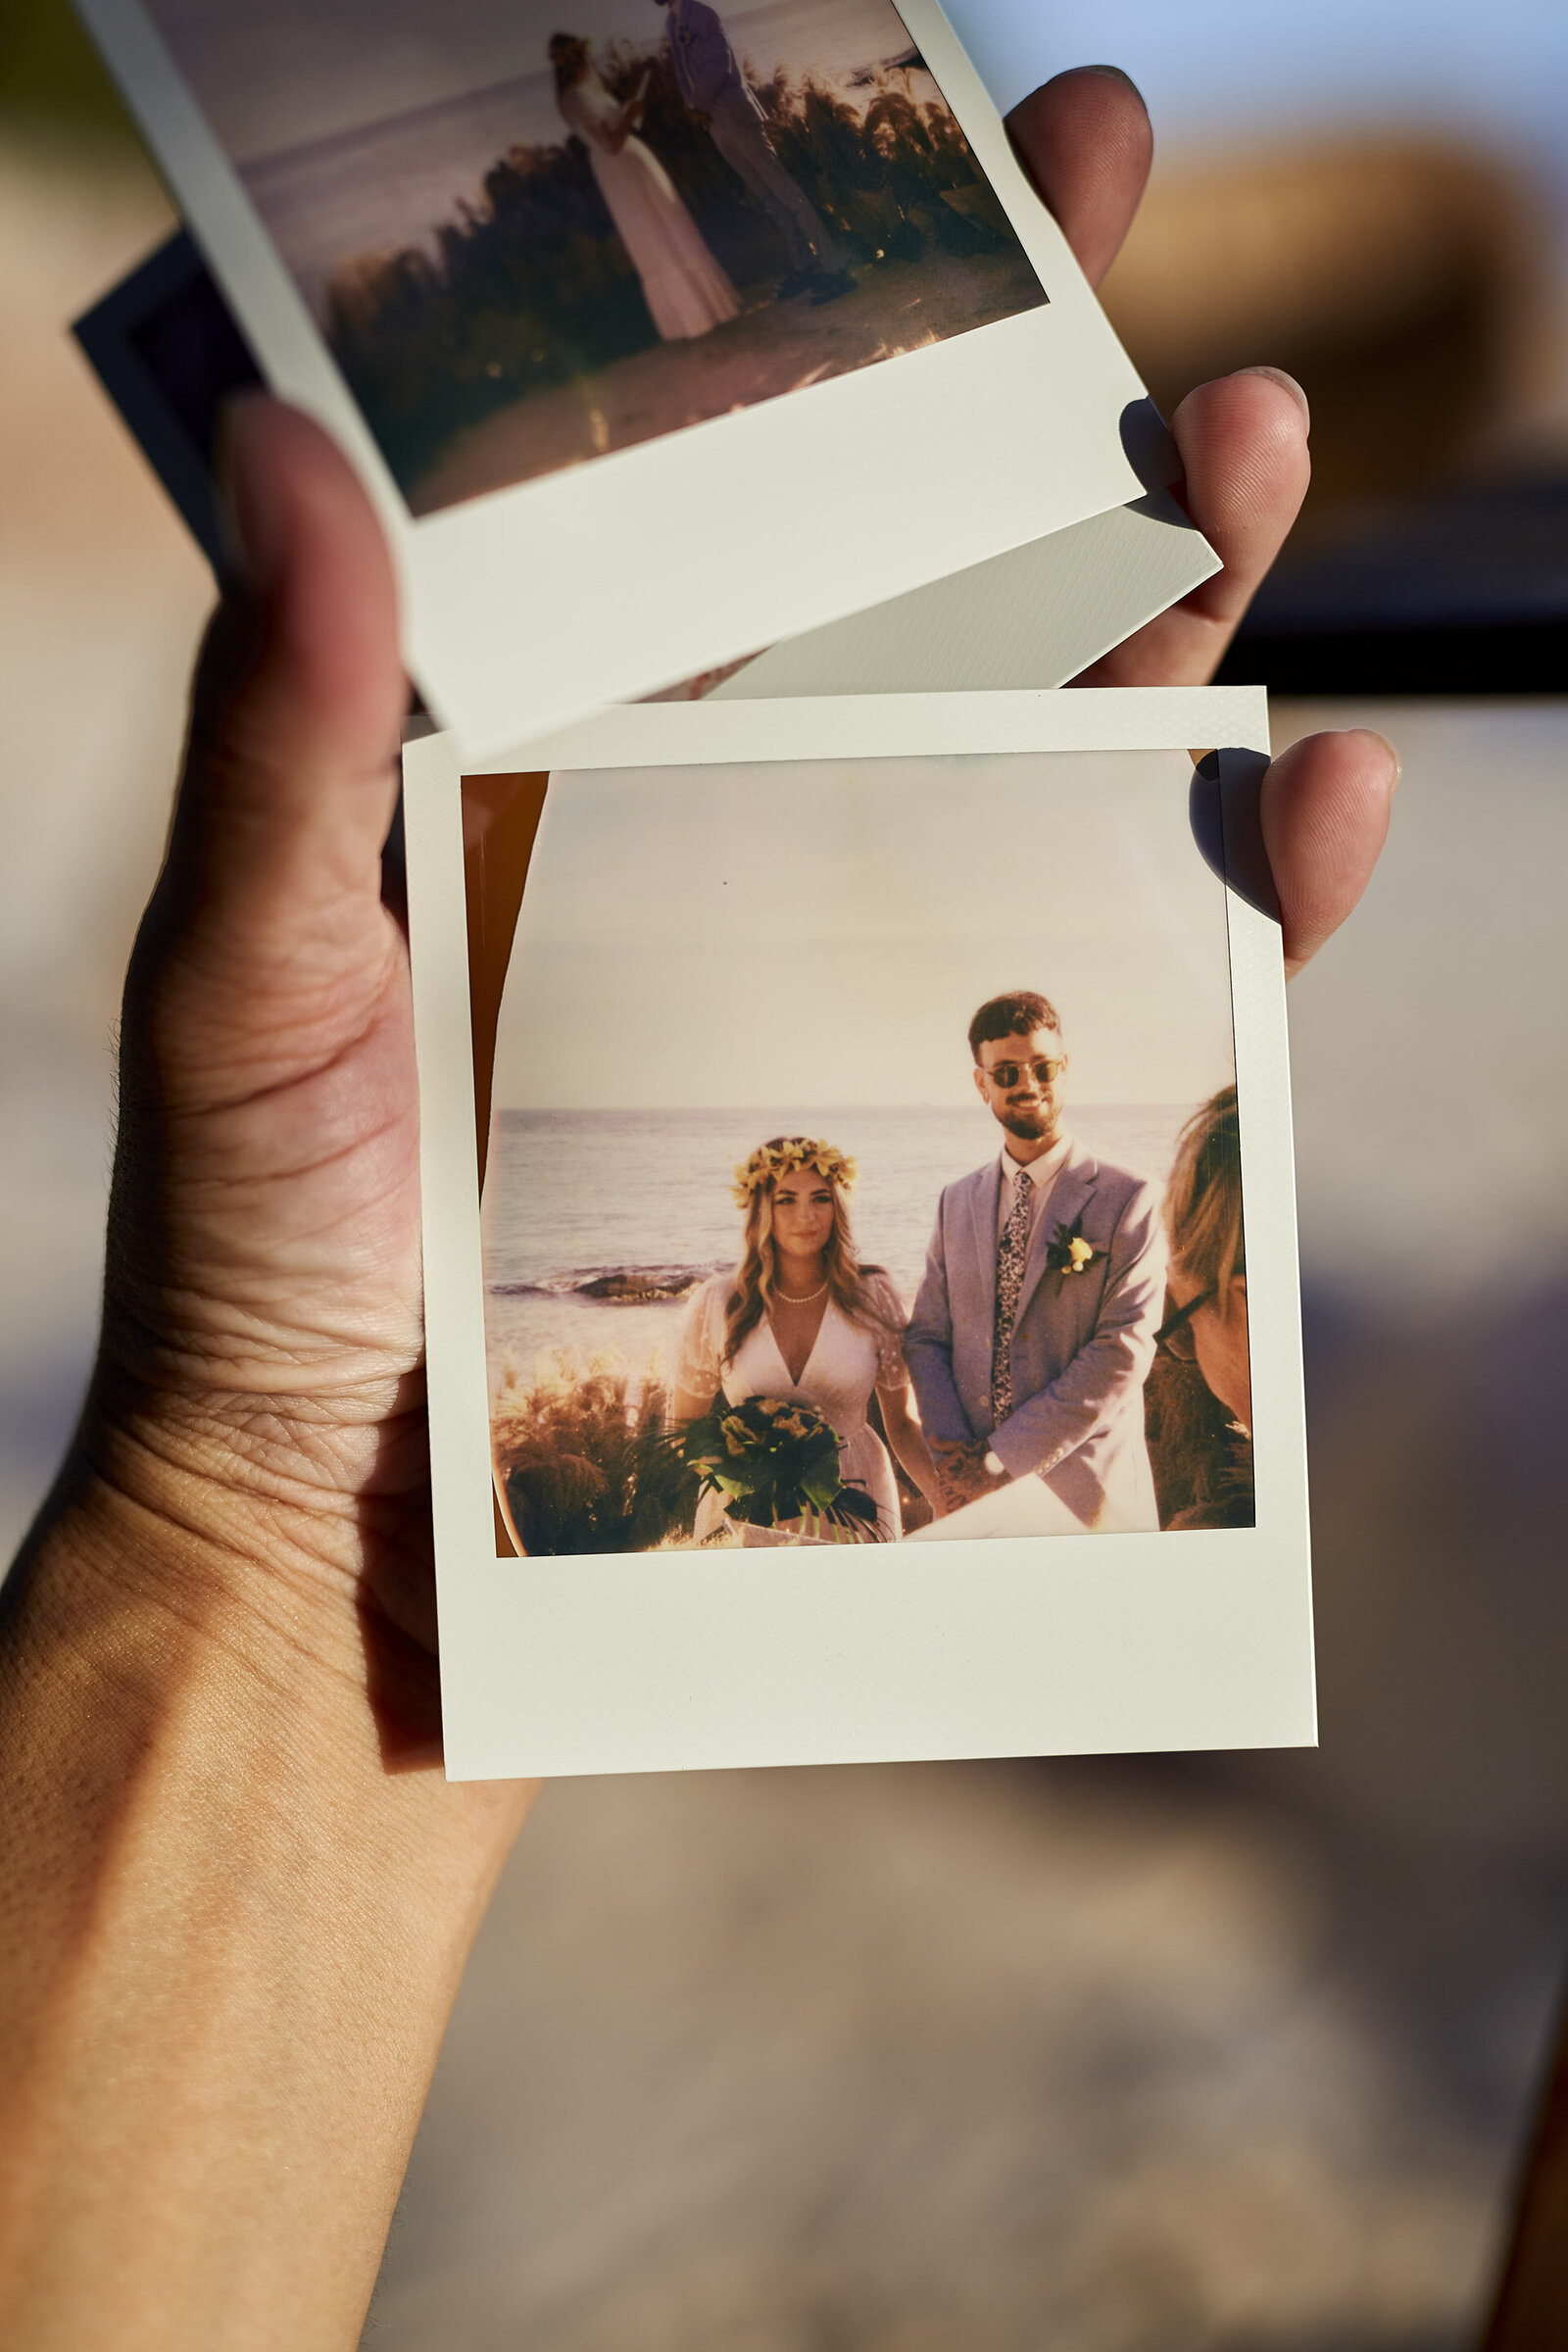 Polaroid camera at wedding